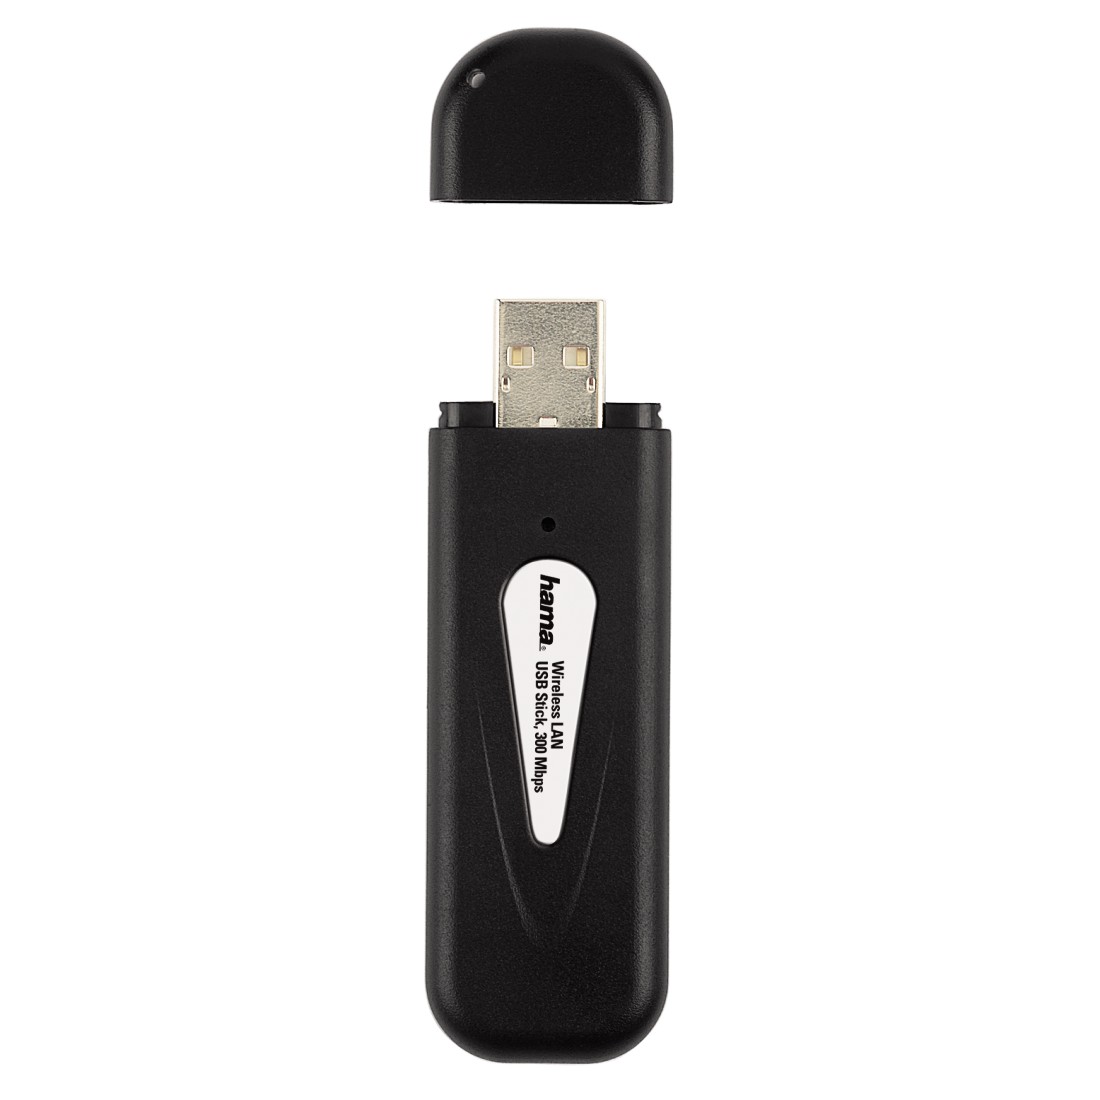 Hama n150 Nano WLAN USB Stick, 2.4 GHZ. WIFI стик. WLAN Stick. Wi-Fi адаптер Hama h-62740. Стик фай